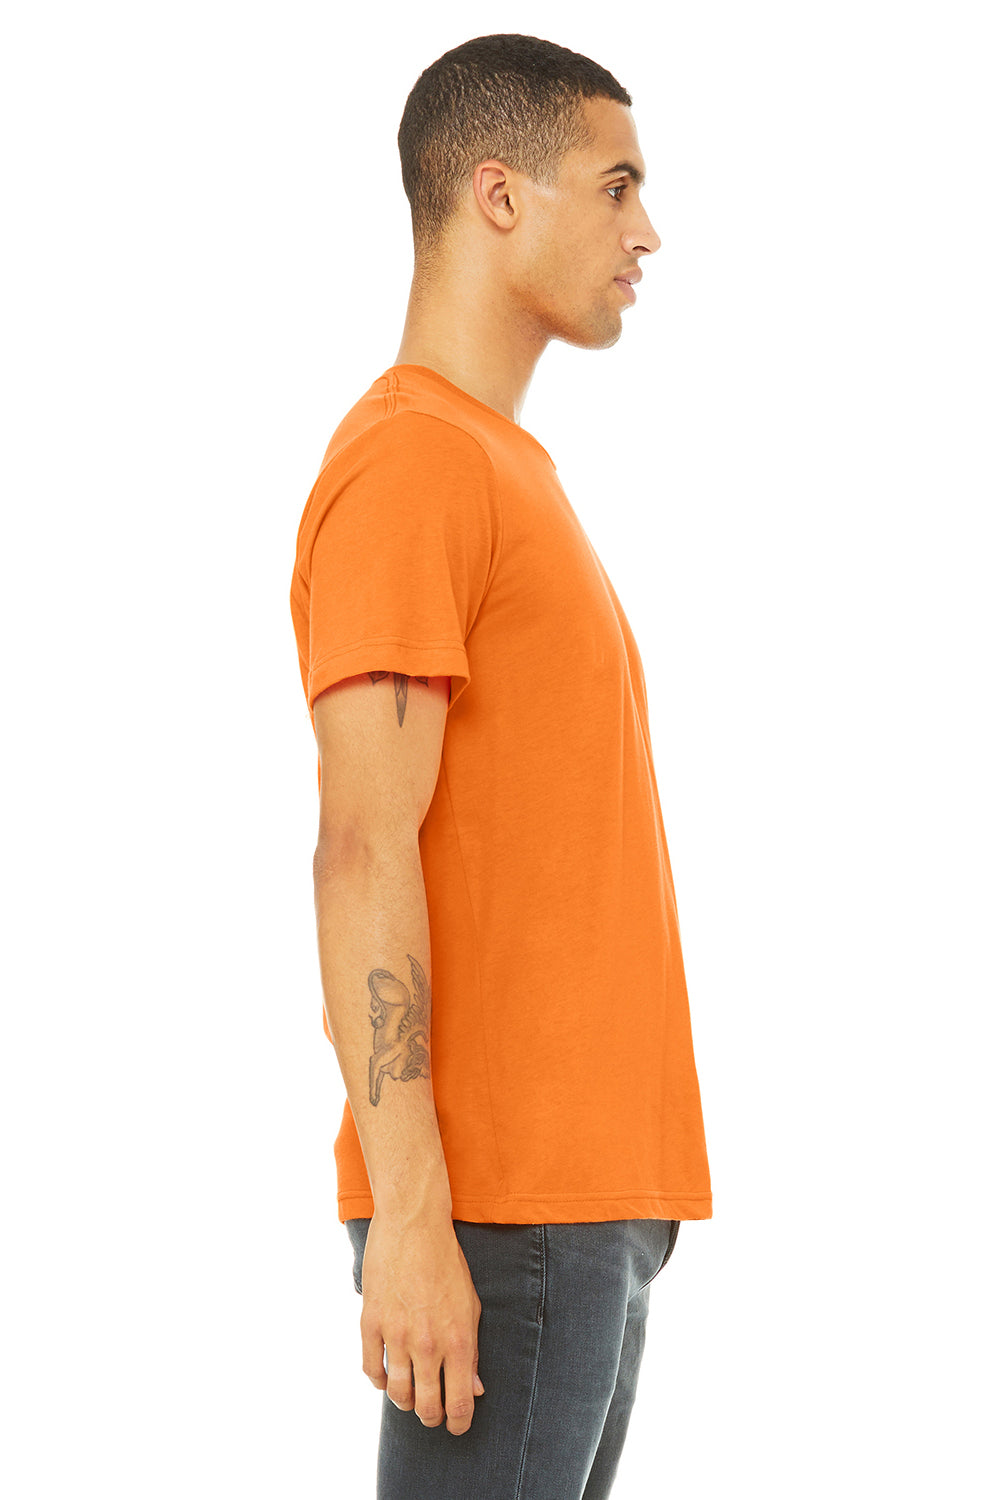 Bella + Canvas 3650 Mens Short Sleeve Crewneck T-Shirt Neon Orange Side